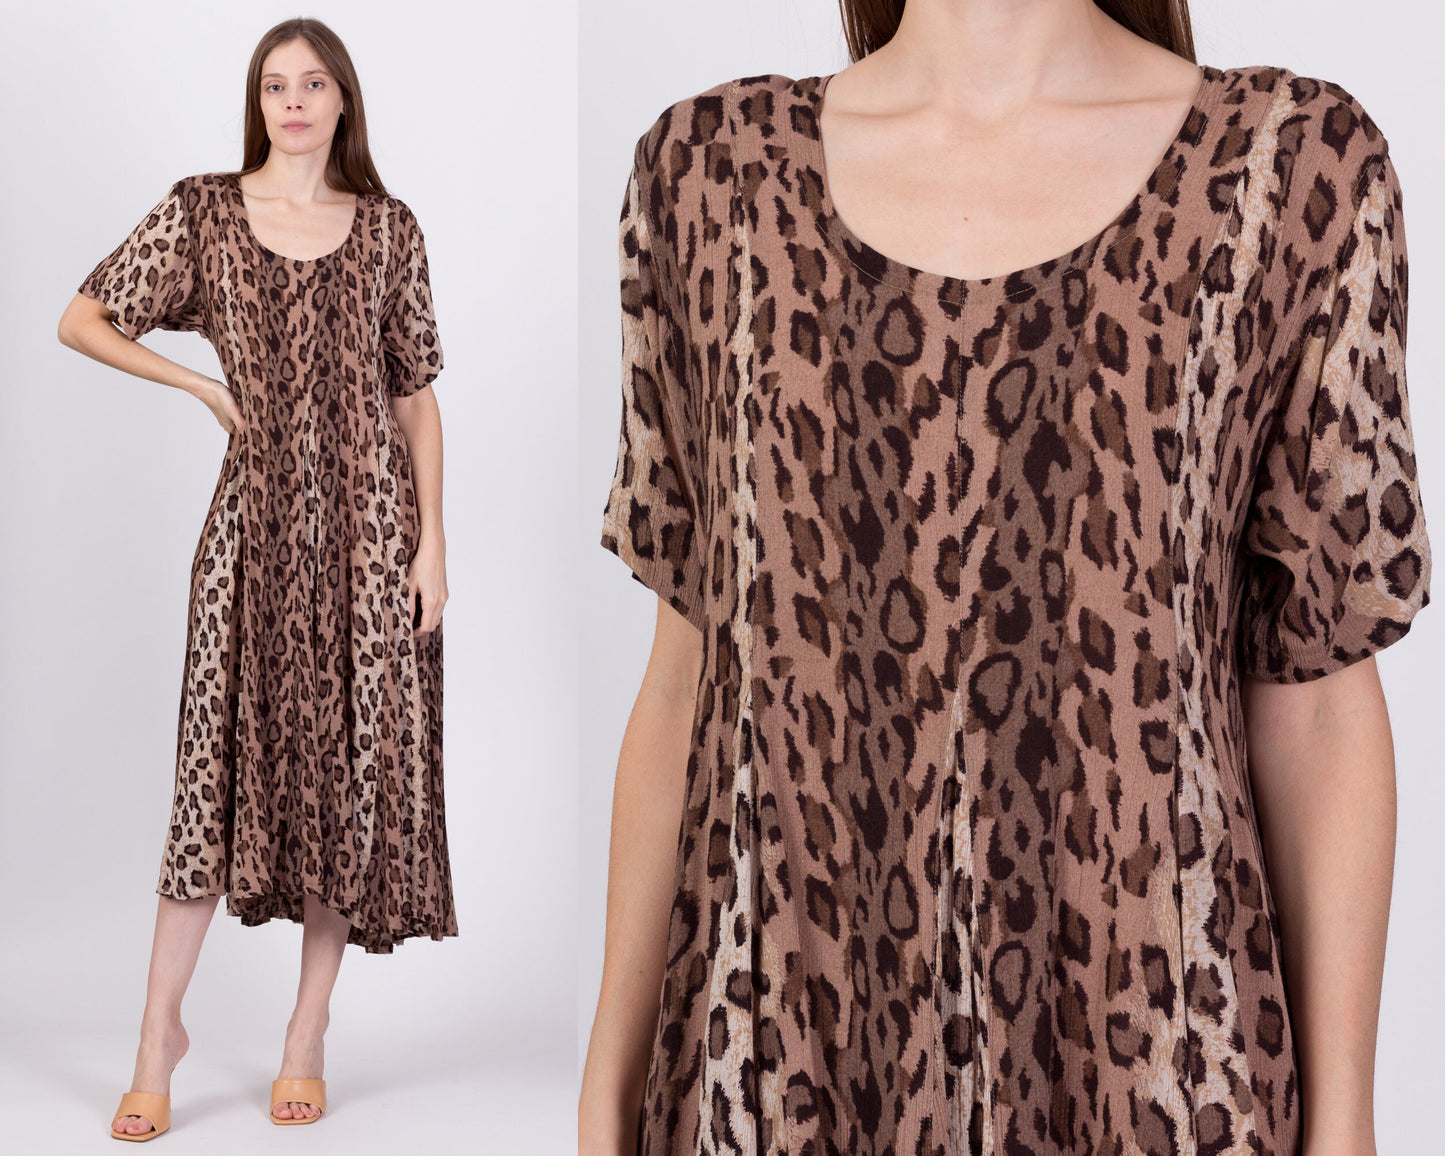 90s Grunge Leopard Print Dress - Small 